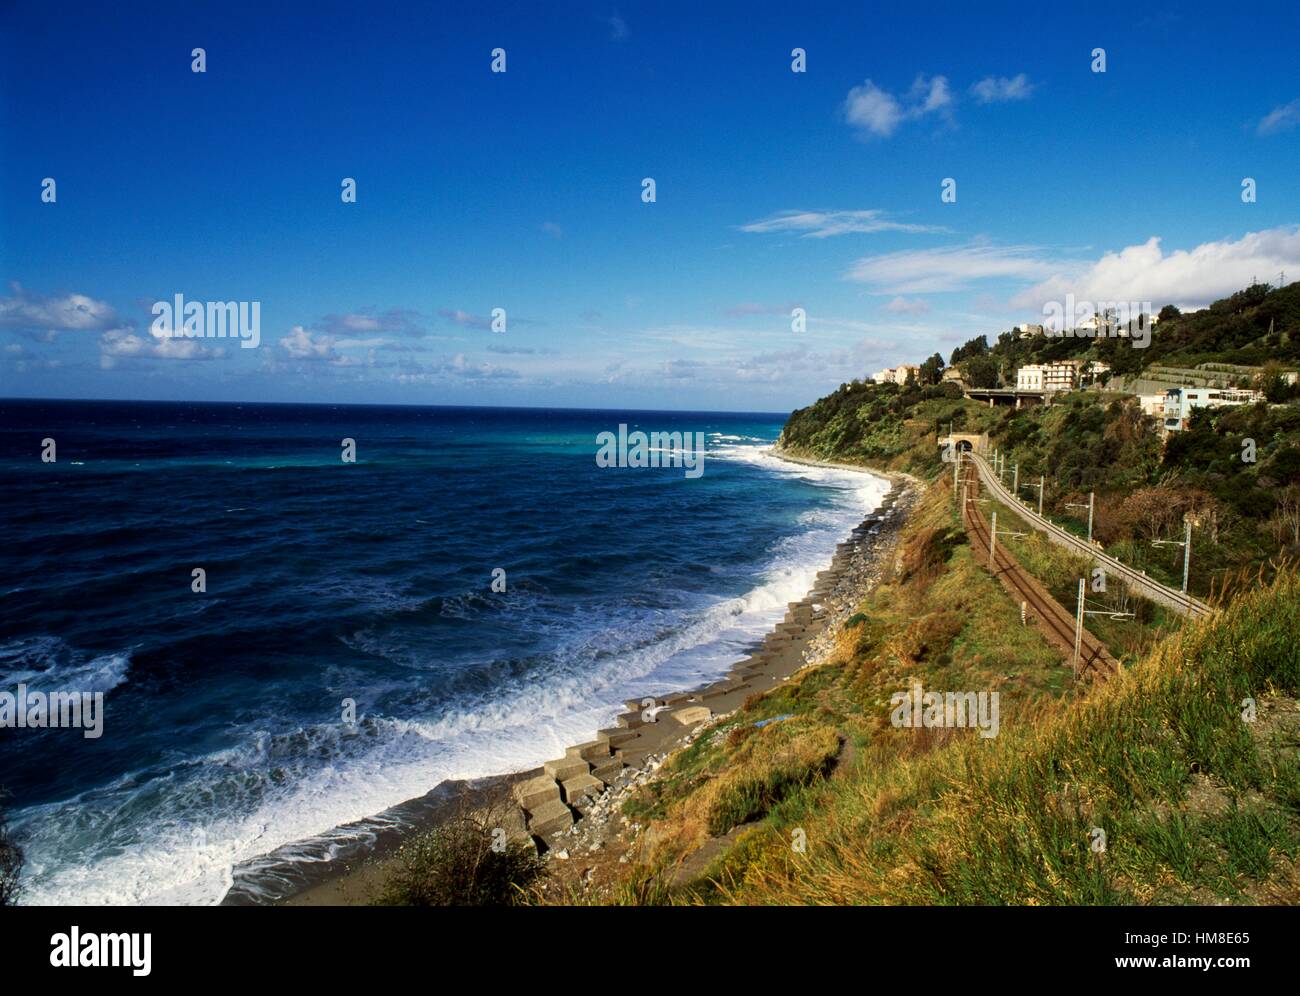 Coast and railway line in Marina di Fuscaldo, Calabria, Italy. Stock Photo